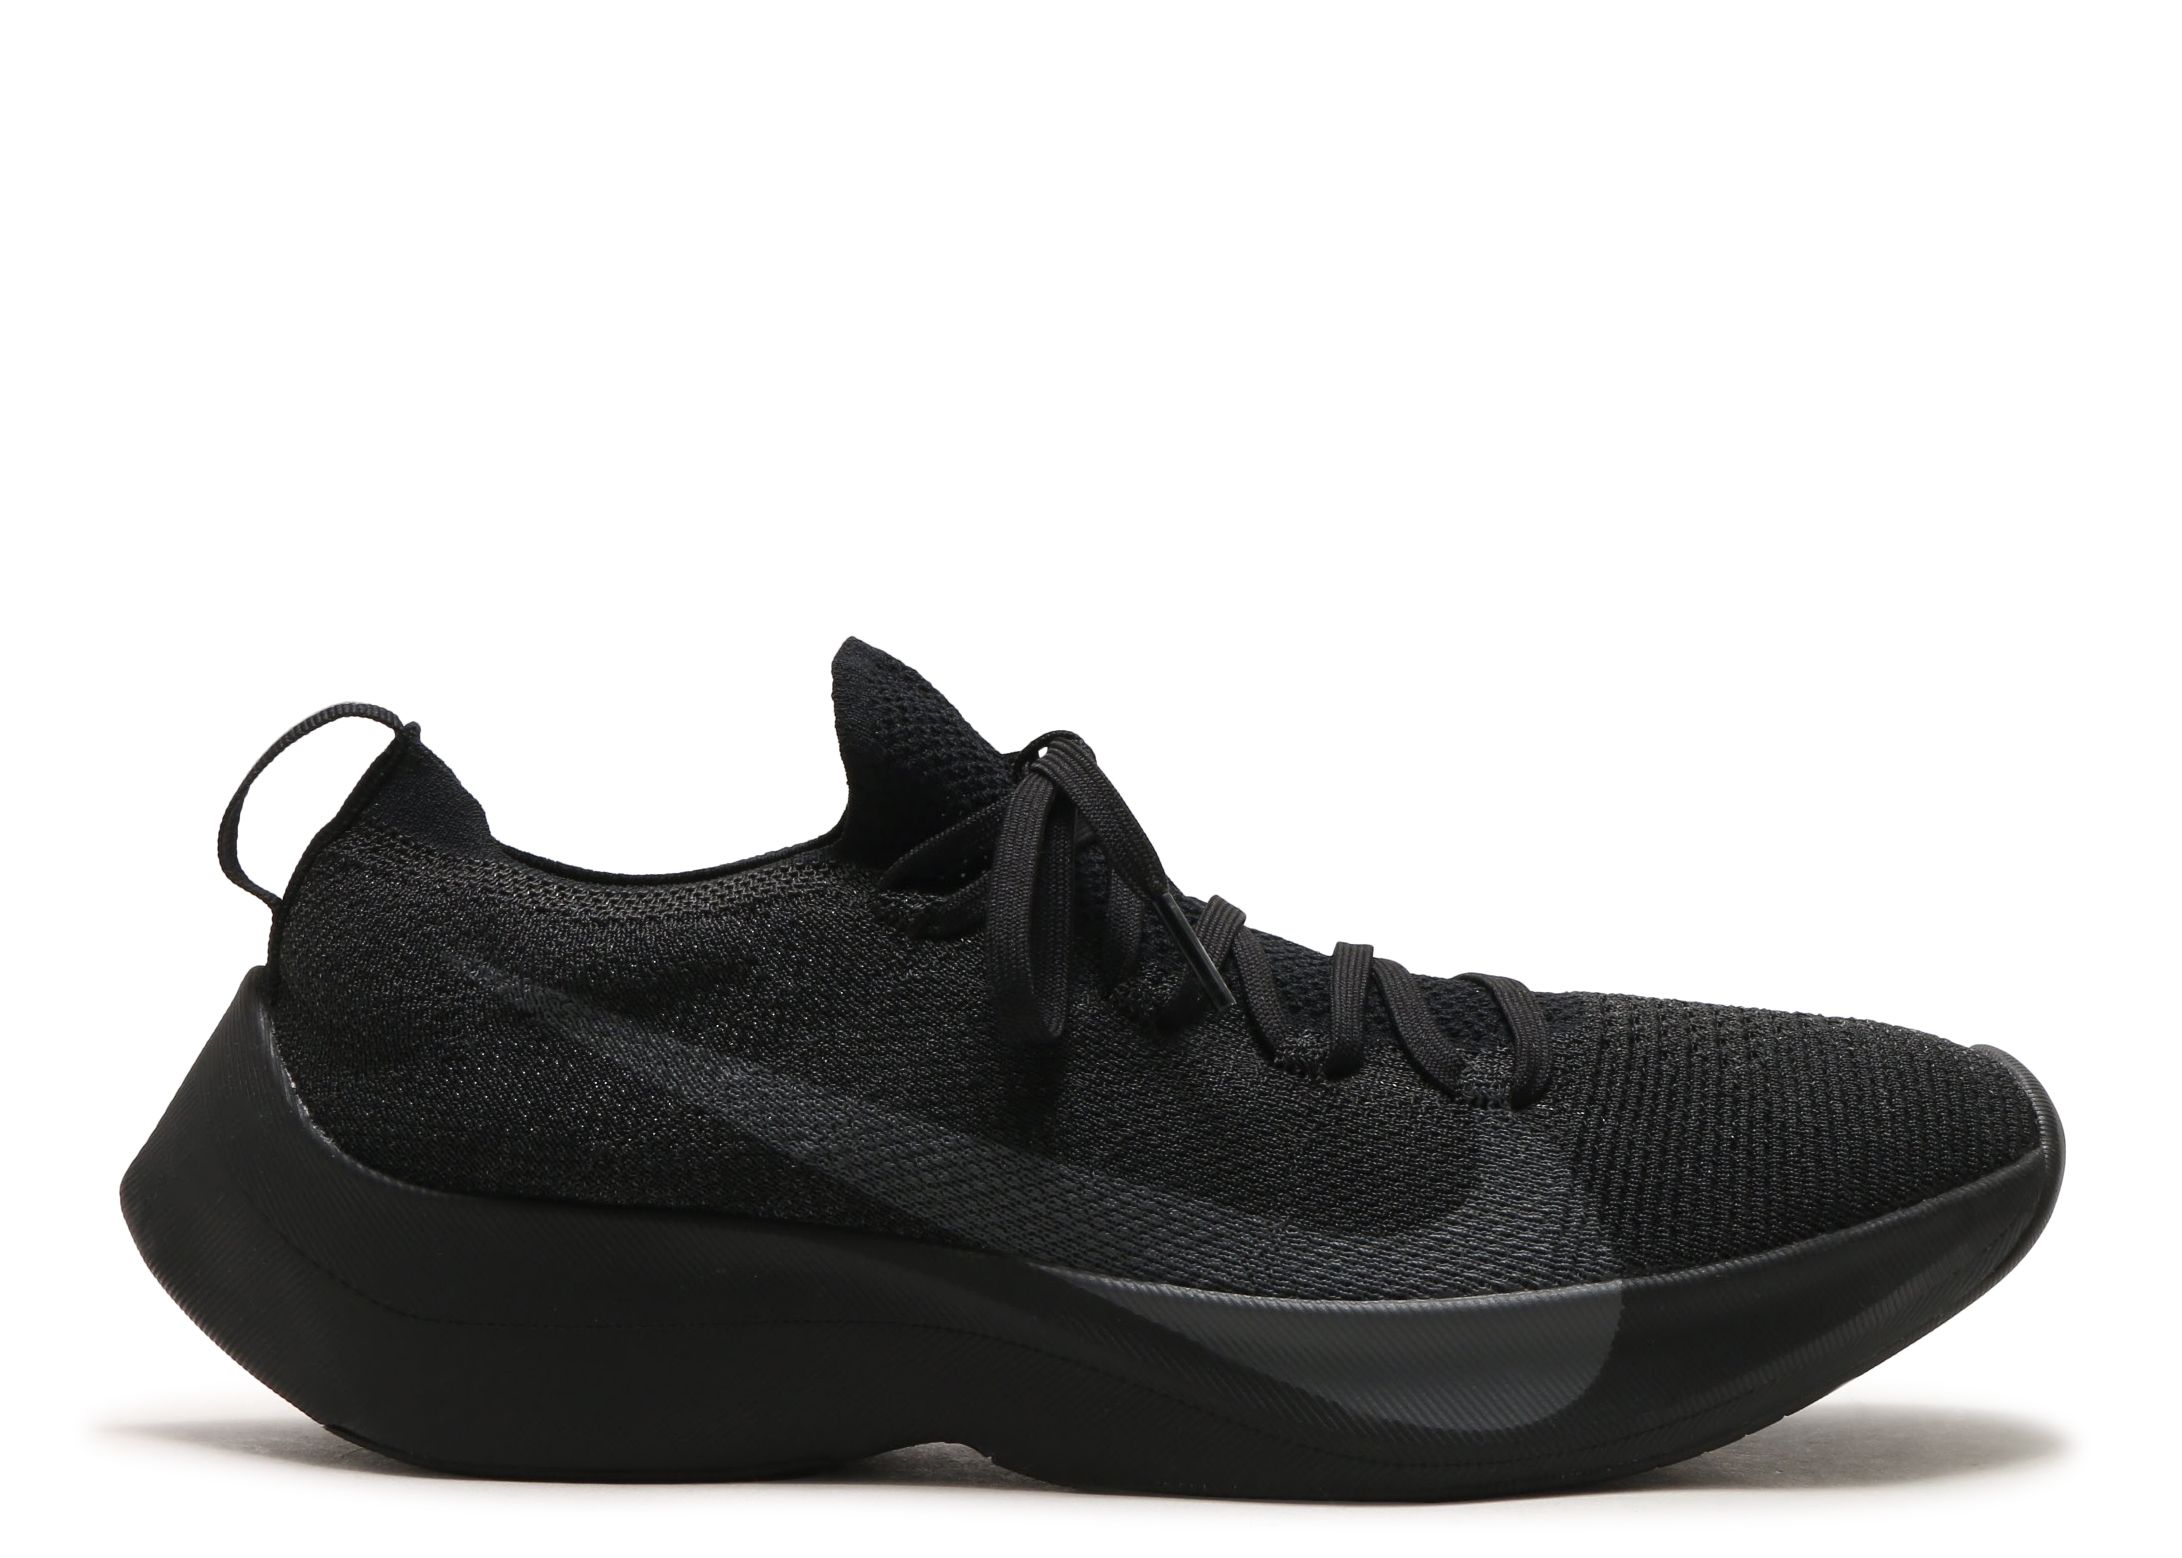 Vapor Street Flyknit 'Black' - Nike 